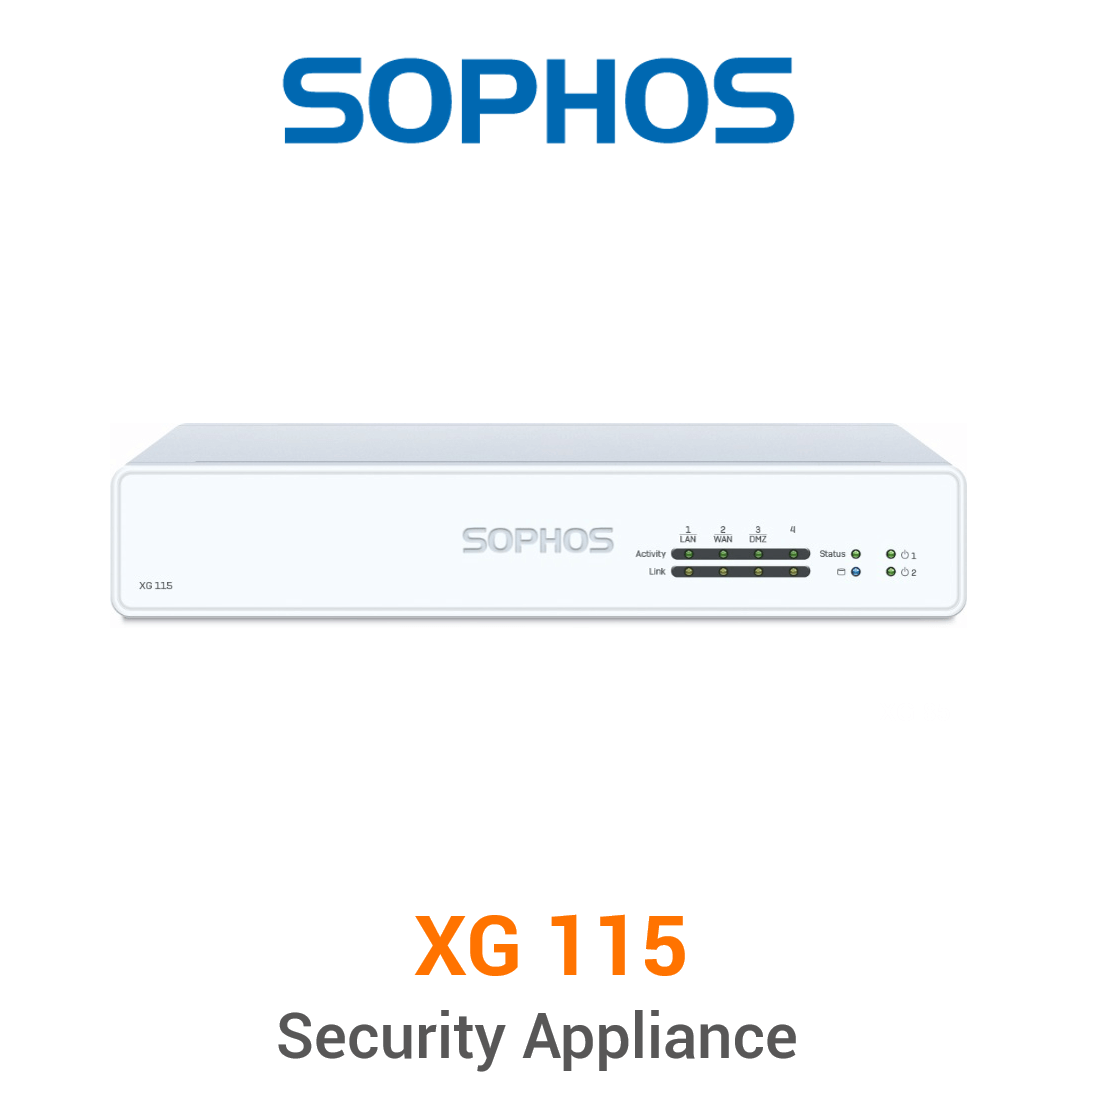 Sophos XG 115 Security Appliance